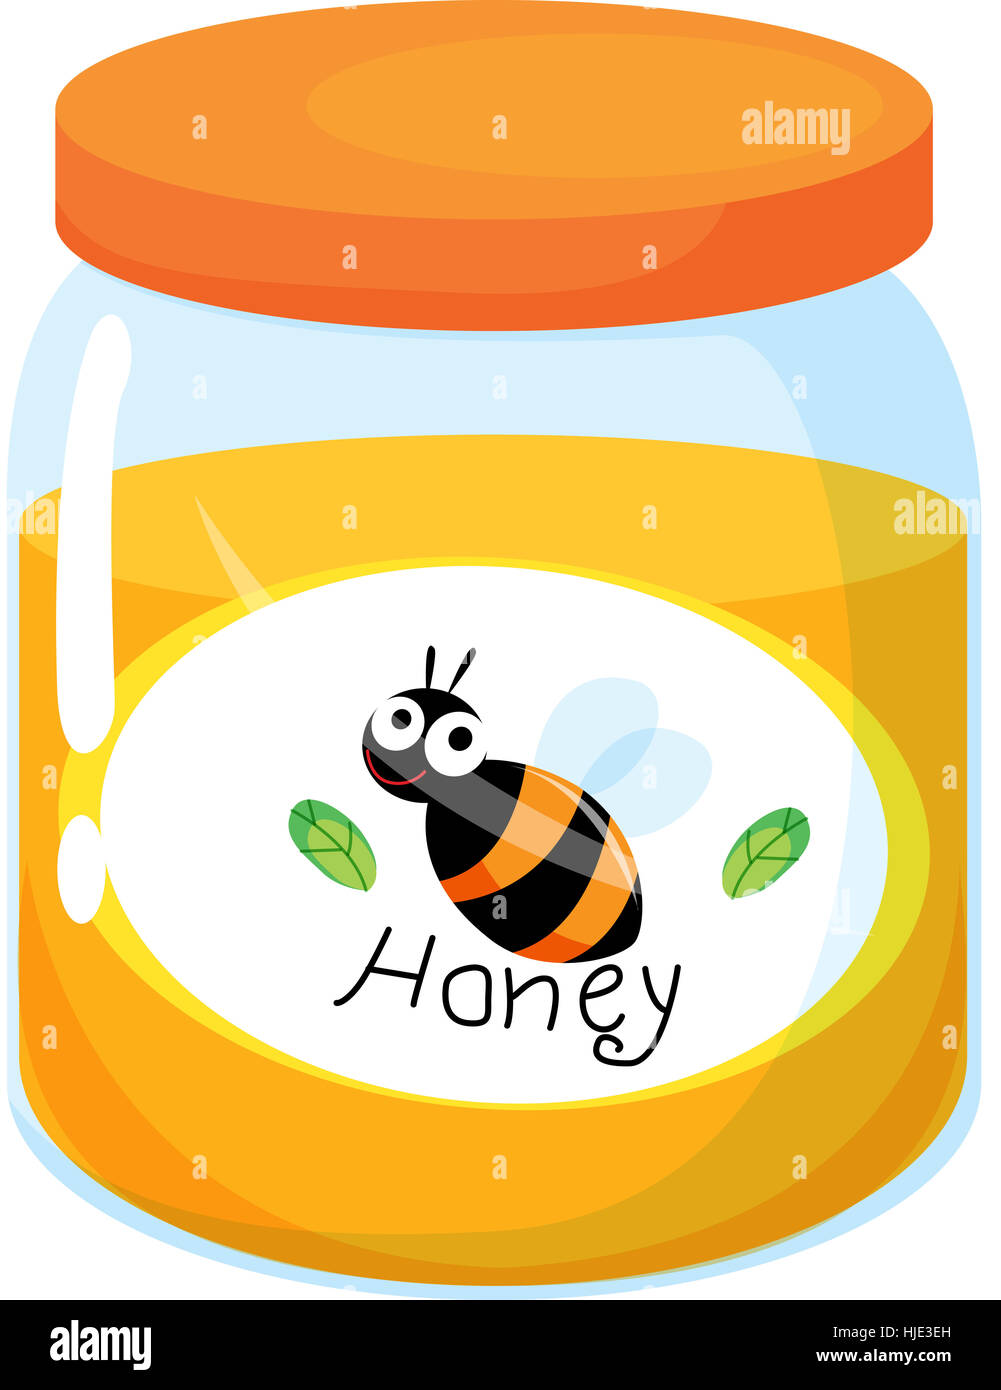 A Jar of Honey рисунок